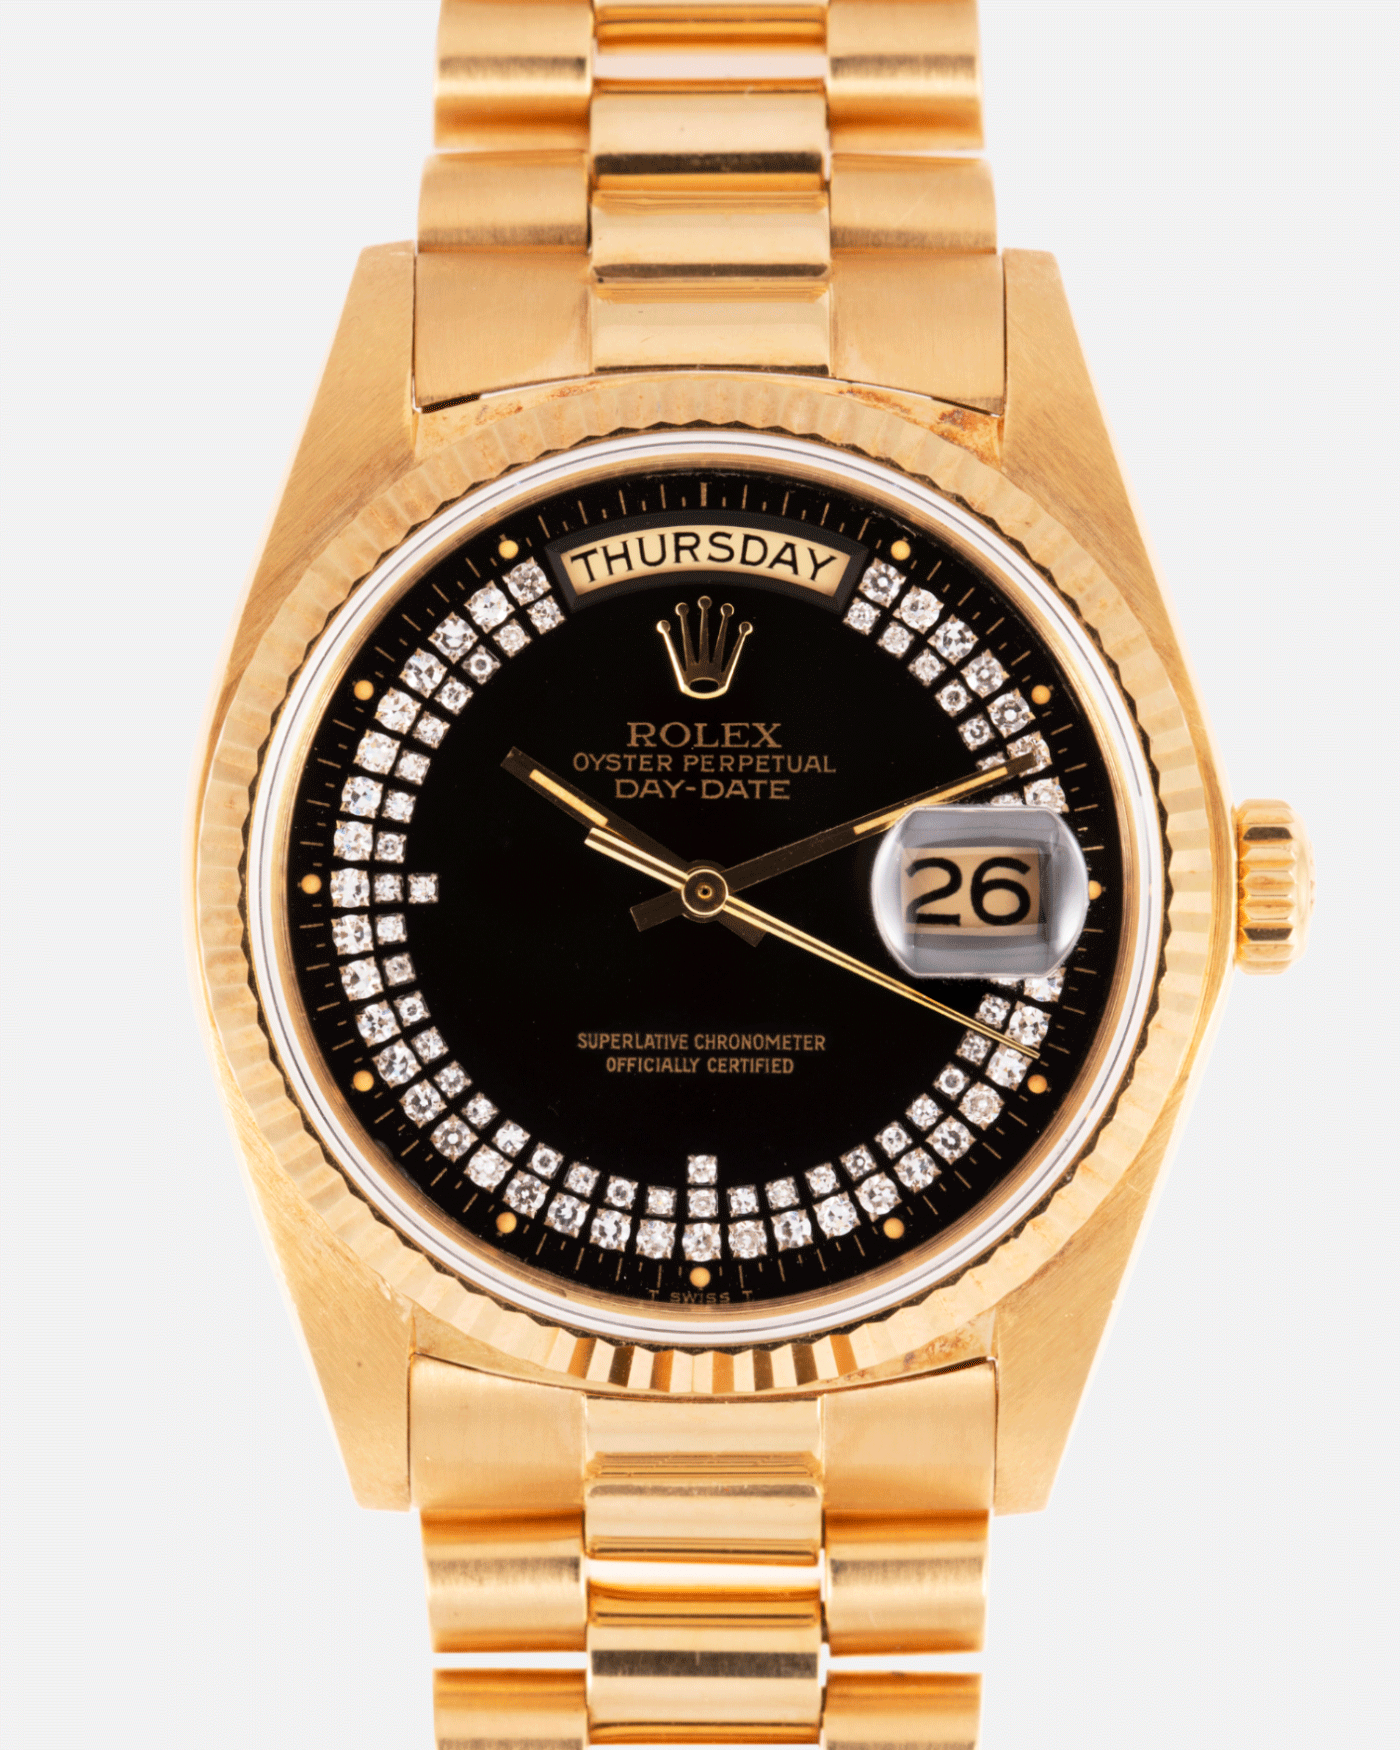 Brand: Rolex Year: 1982 Model: Day Date Reference Number: 18038 Material: 18k Yellow Gold Movement: Cal. 3055 Case Diameter: 36mm Lug Width: 20mm Bracelet/Strap: Rolex 18k Solid Gold President Bracelet